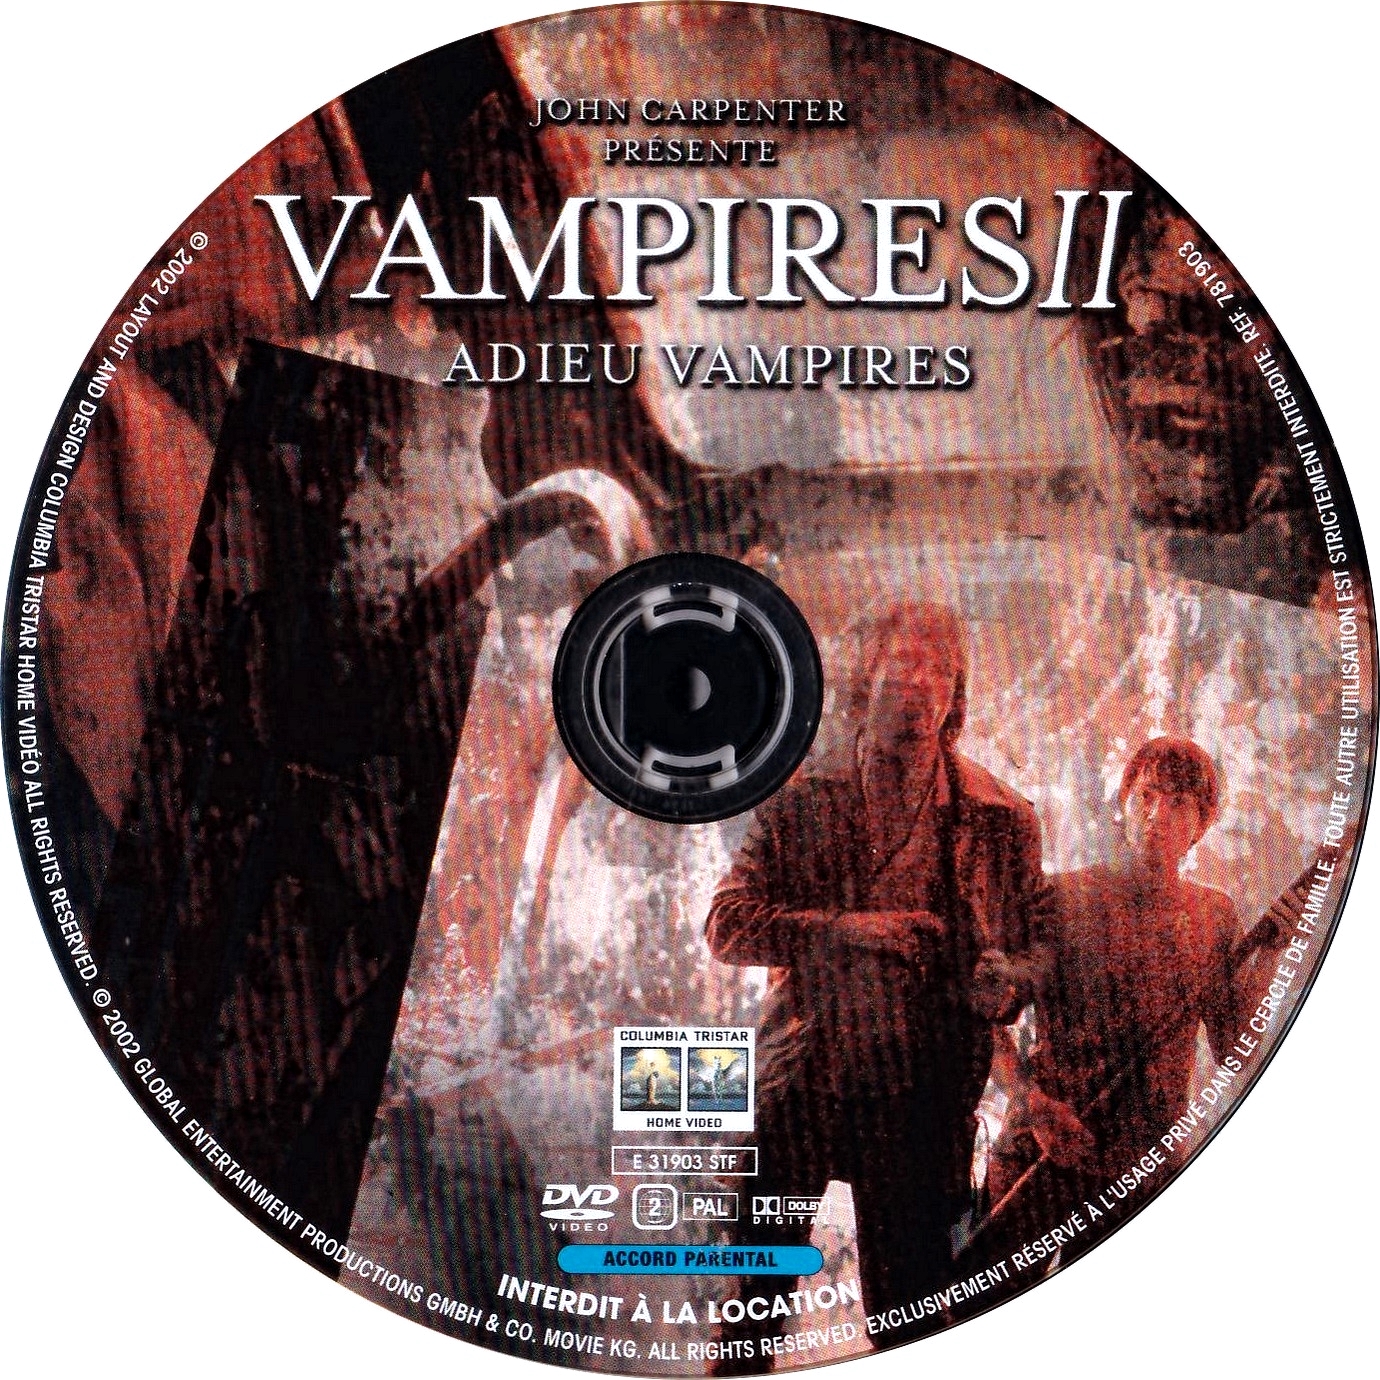 Vampires 2 Adieu Vampires